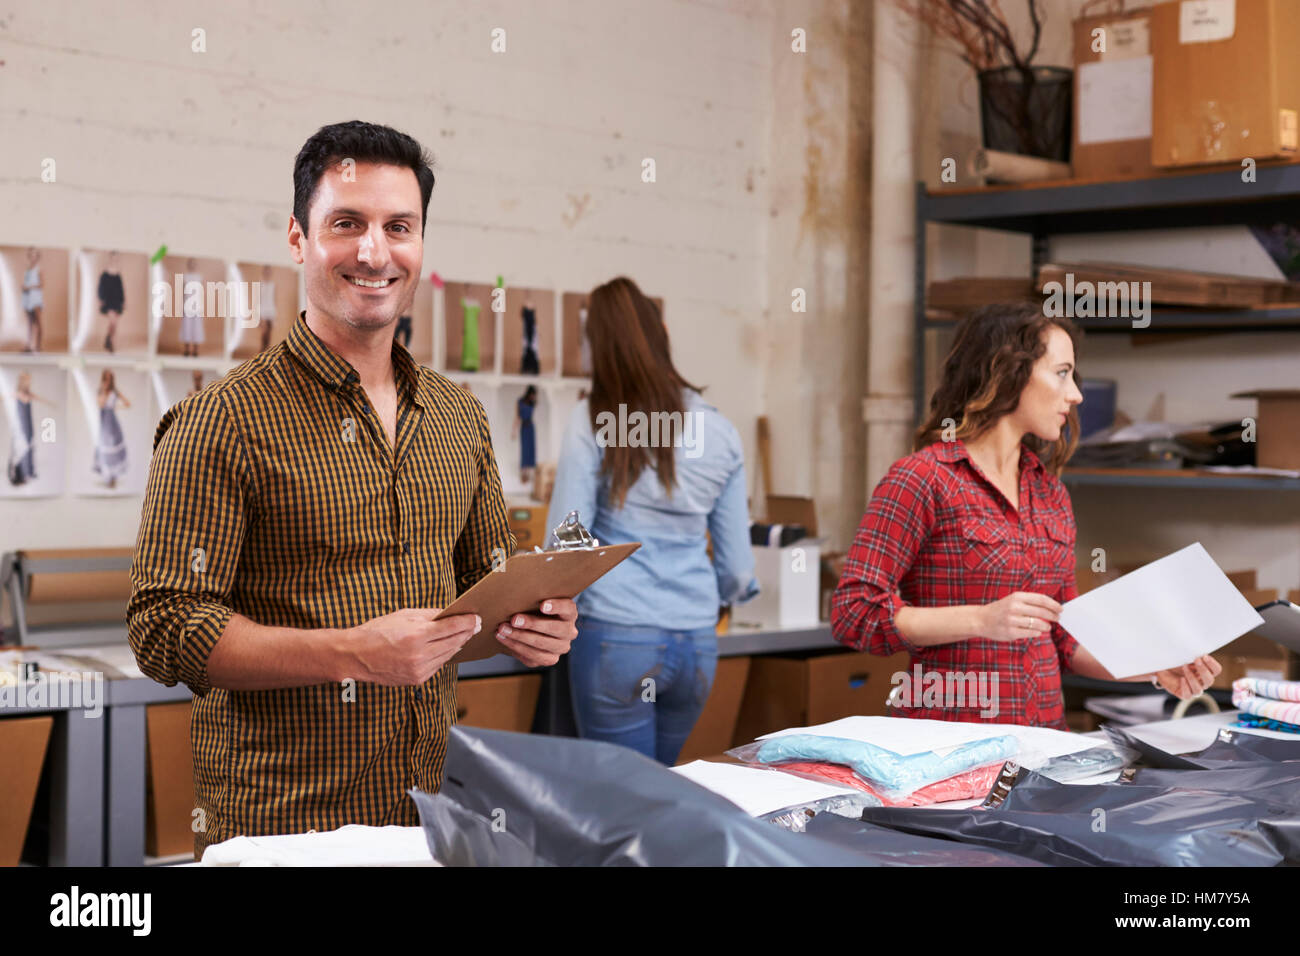 Hispanic man packs orders for distribution, smiles to camera Stock Photo